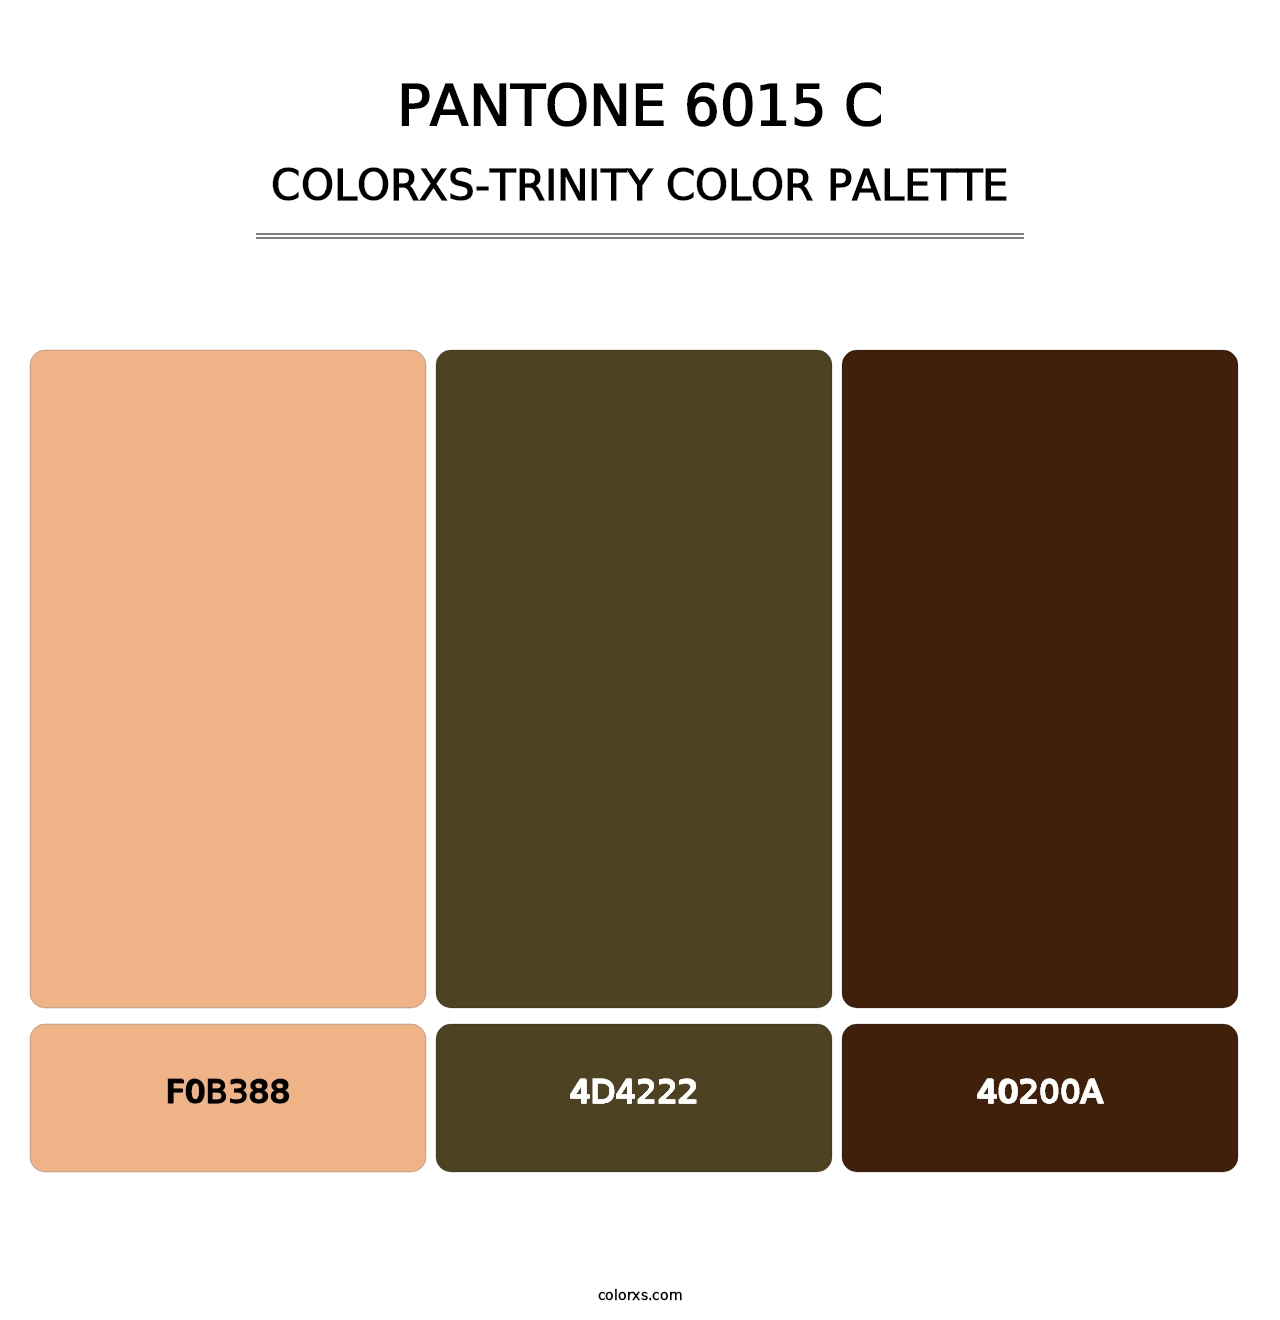 PANTONE 6015 C - Colorxs Trinity Palette